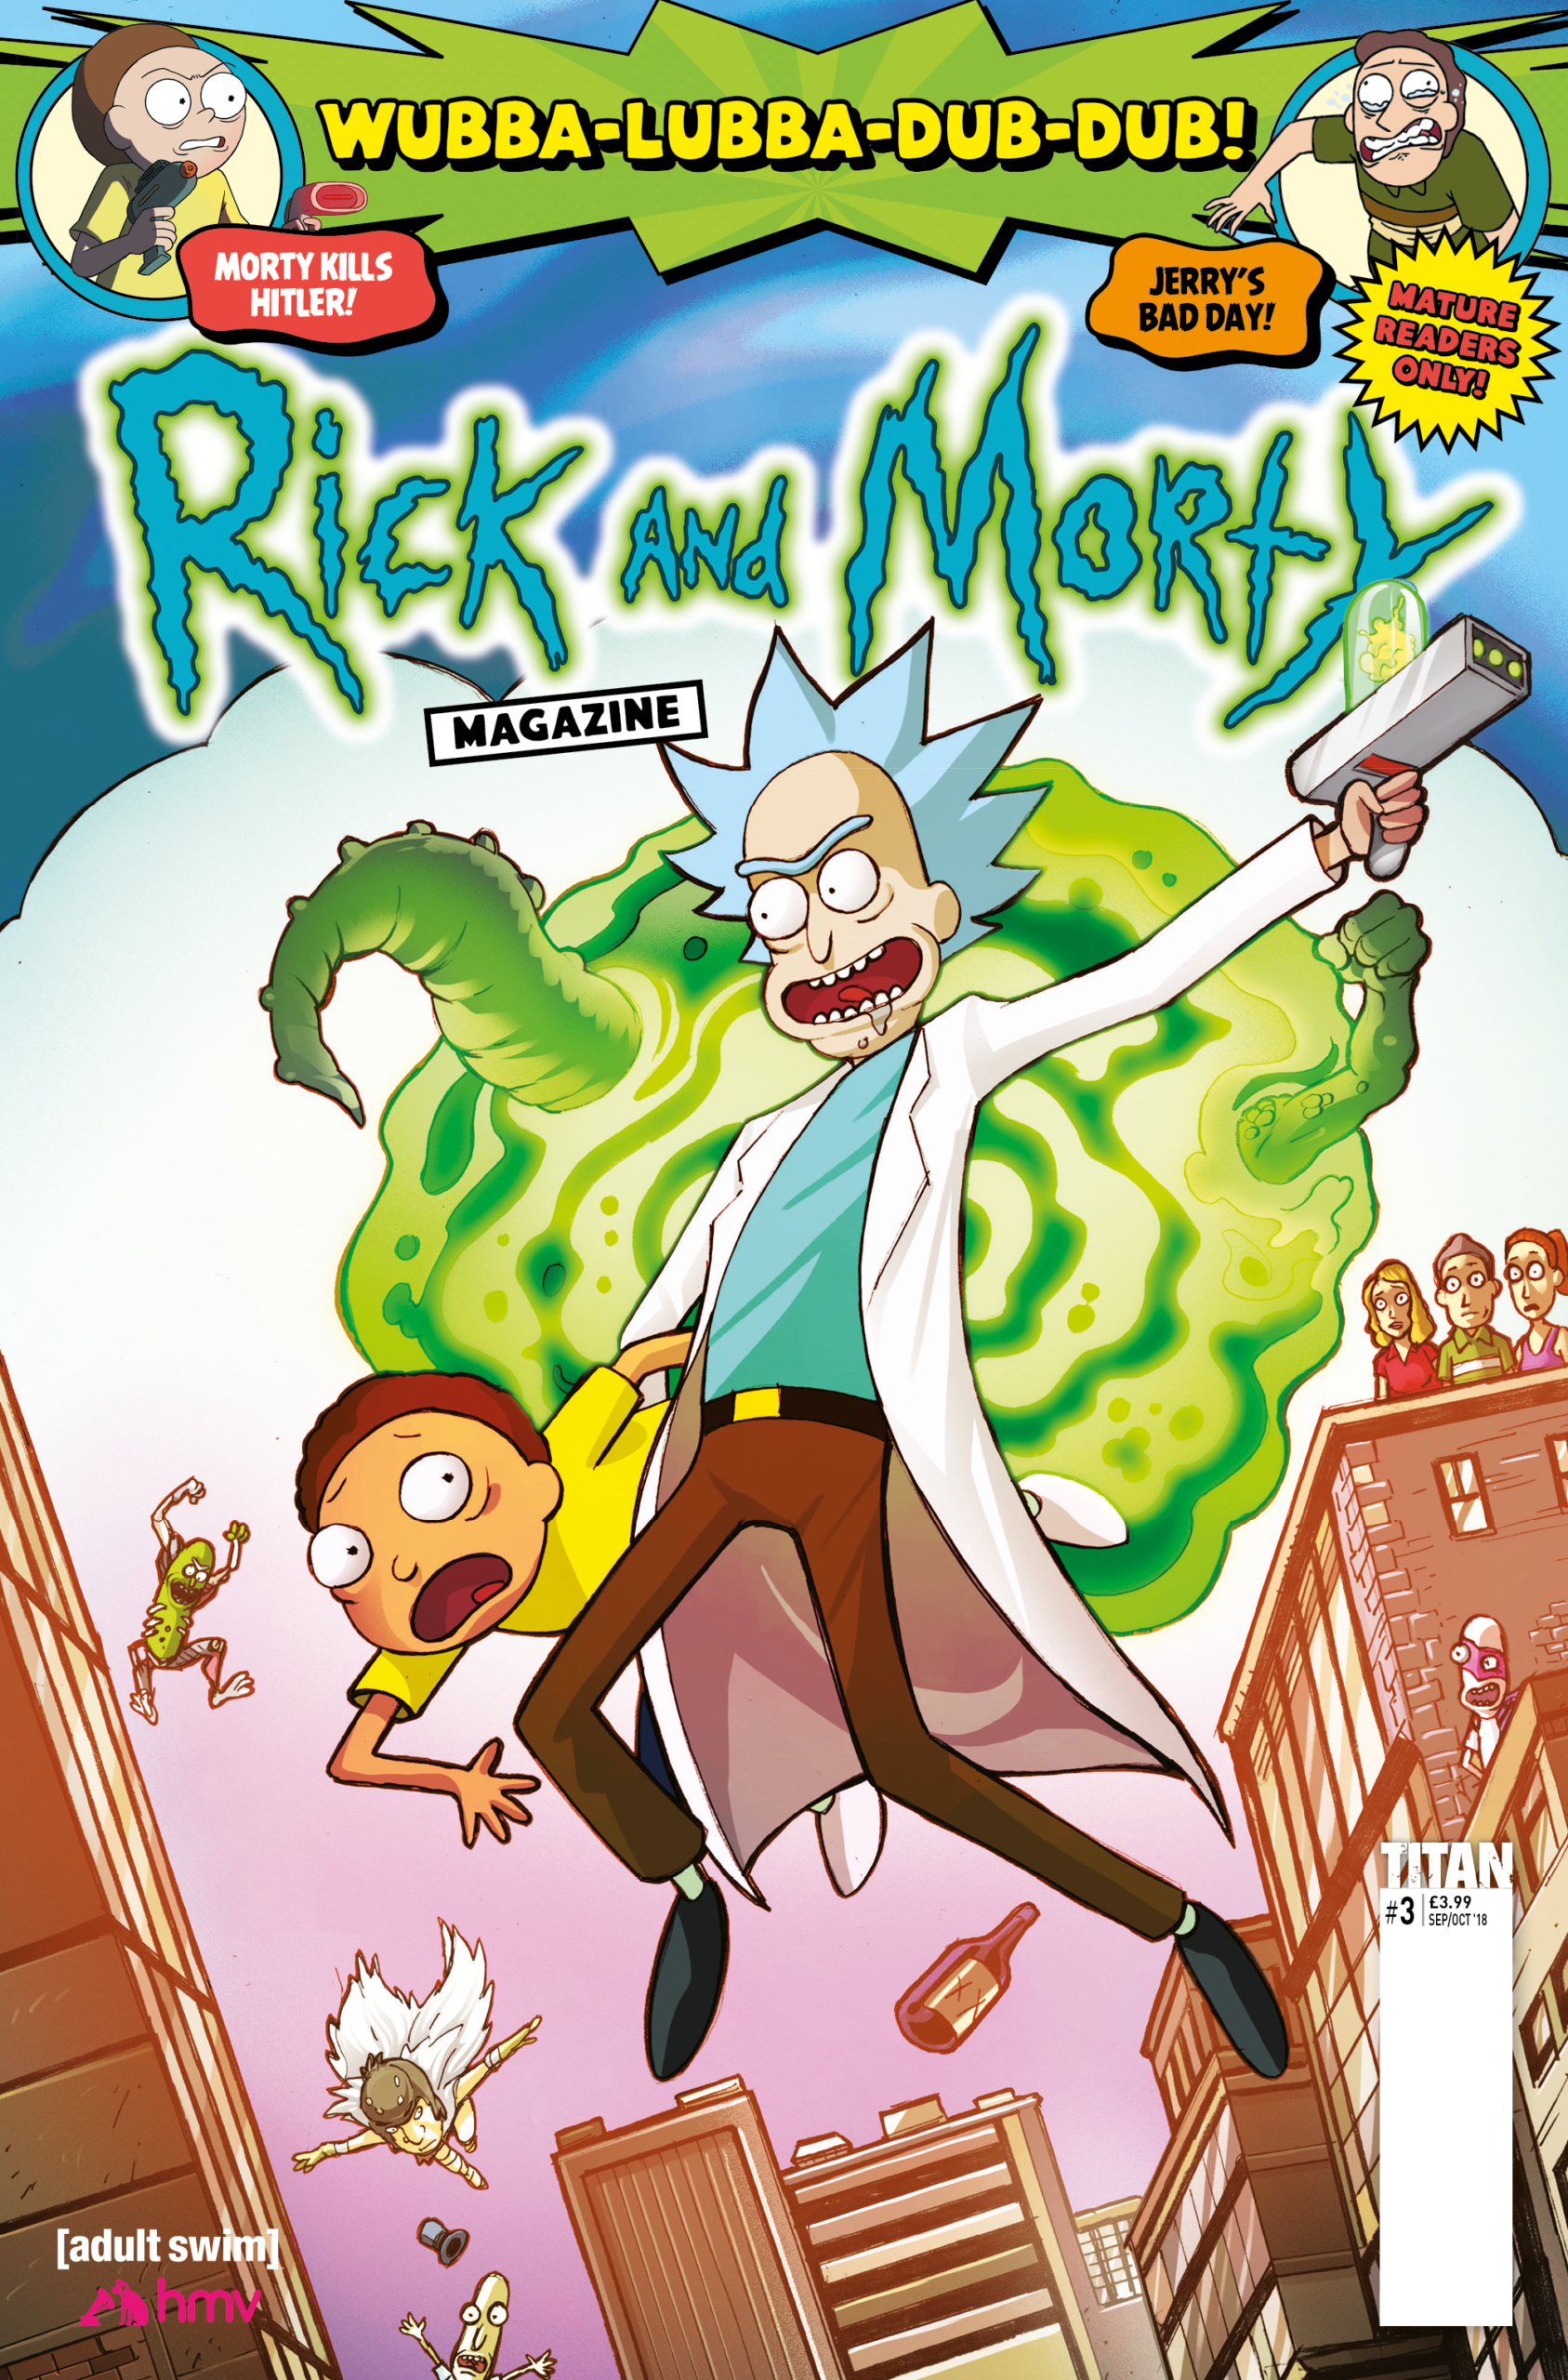 
hmv presents Comic Week Rick and morty magazine
